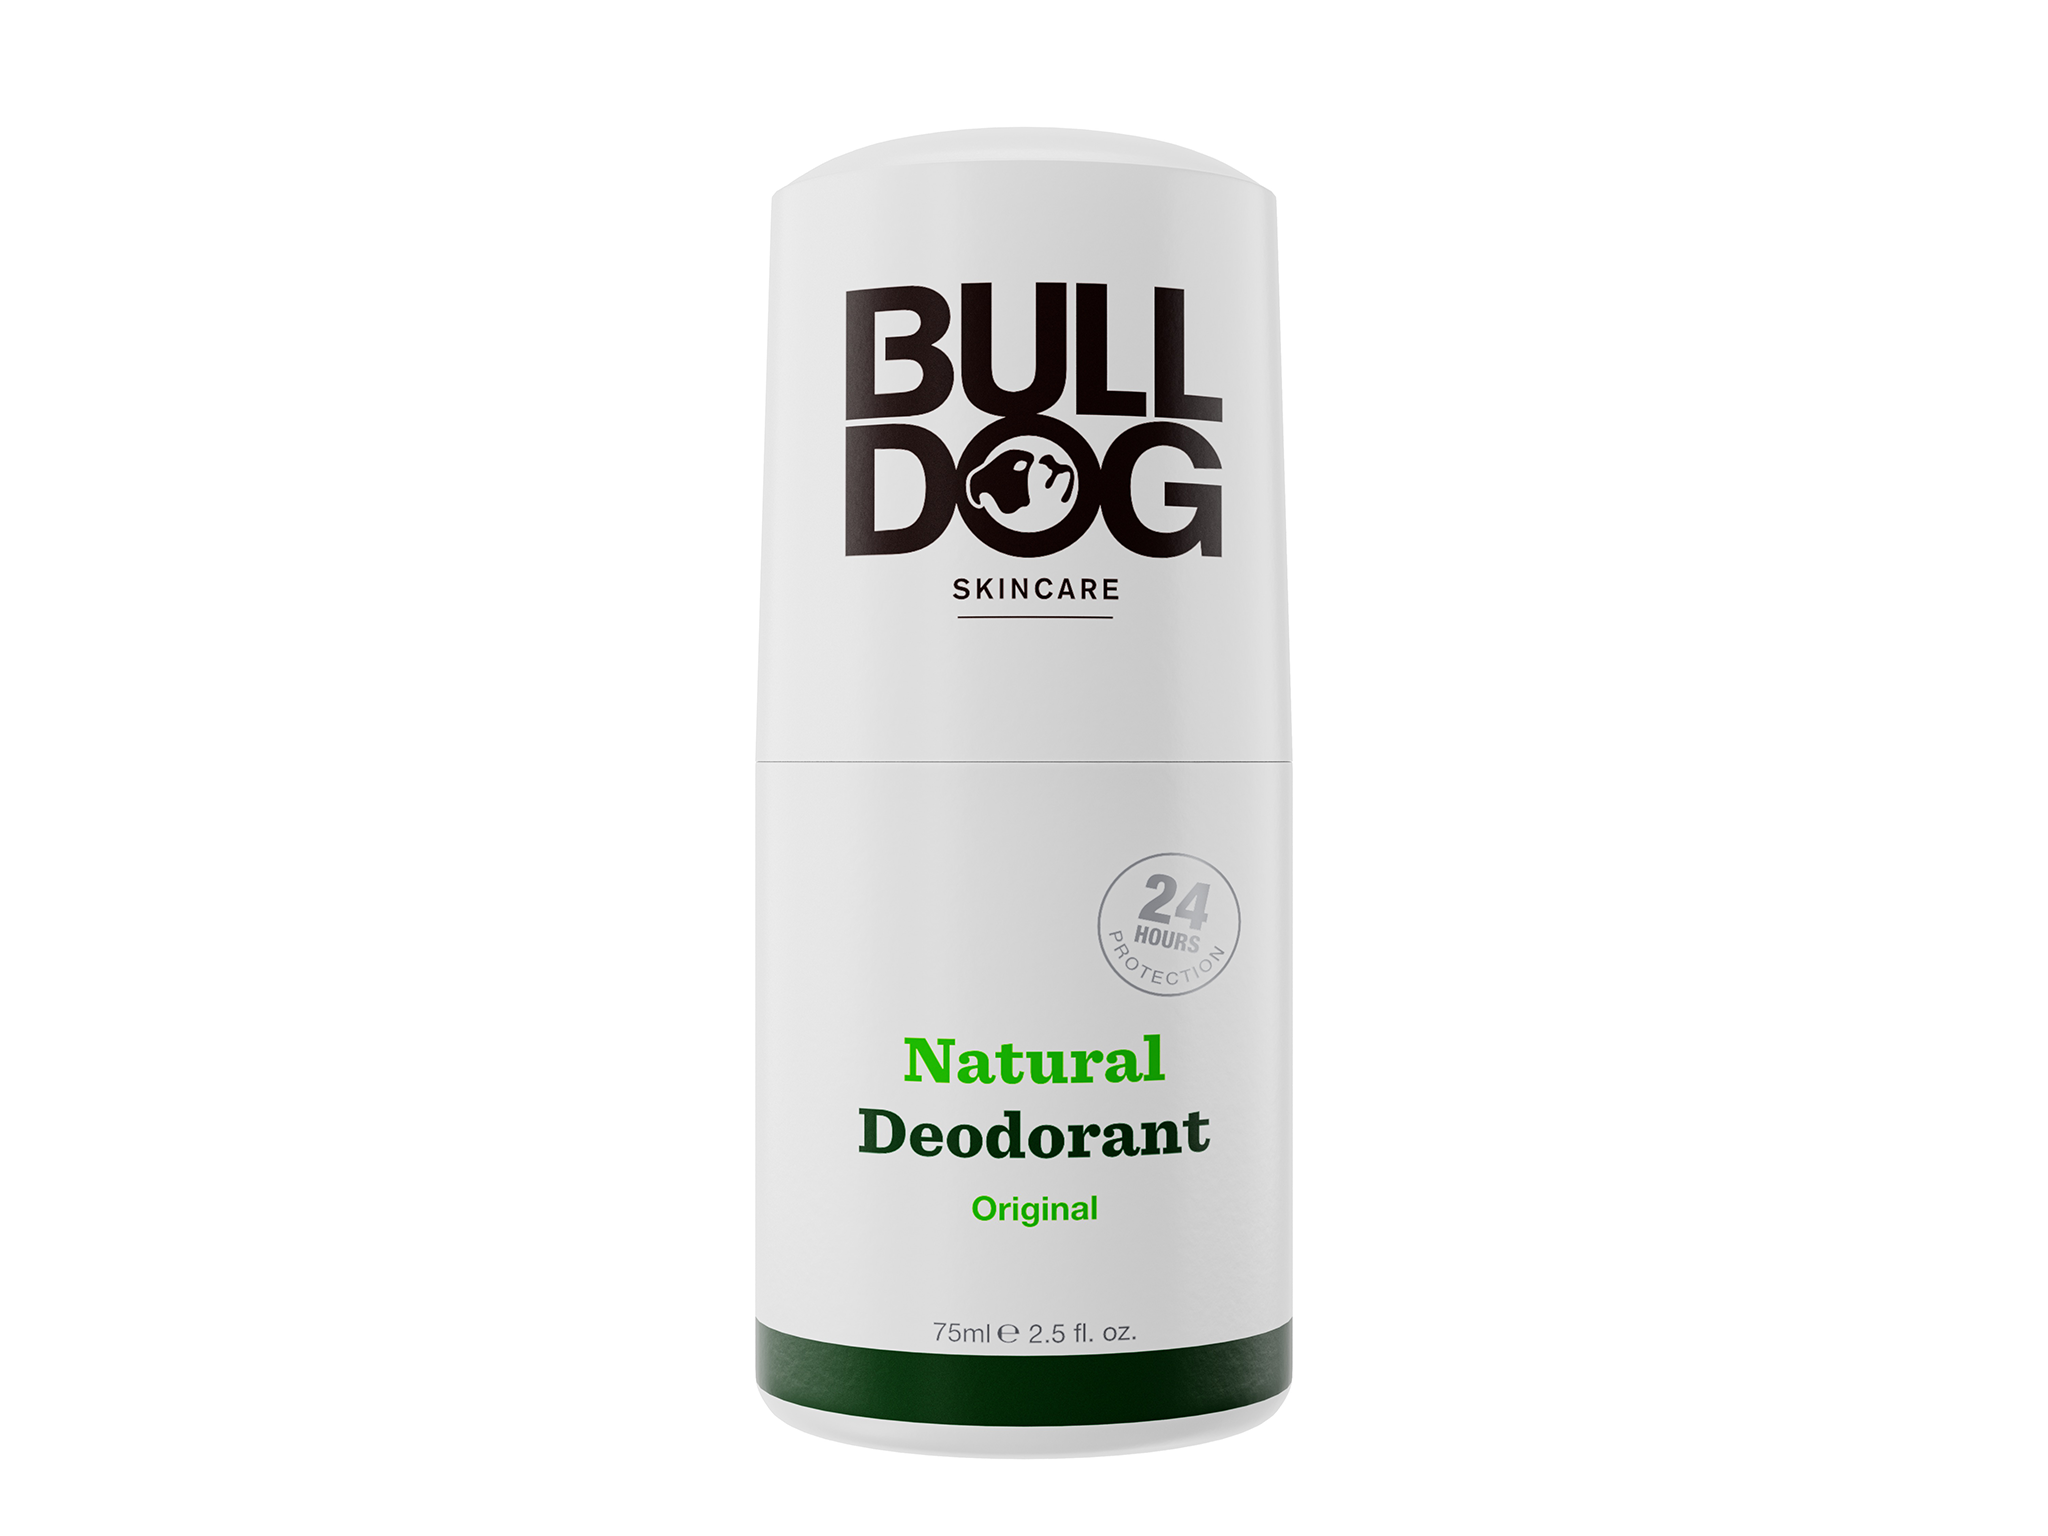 Bulldog natural deodorant